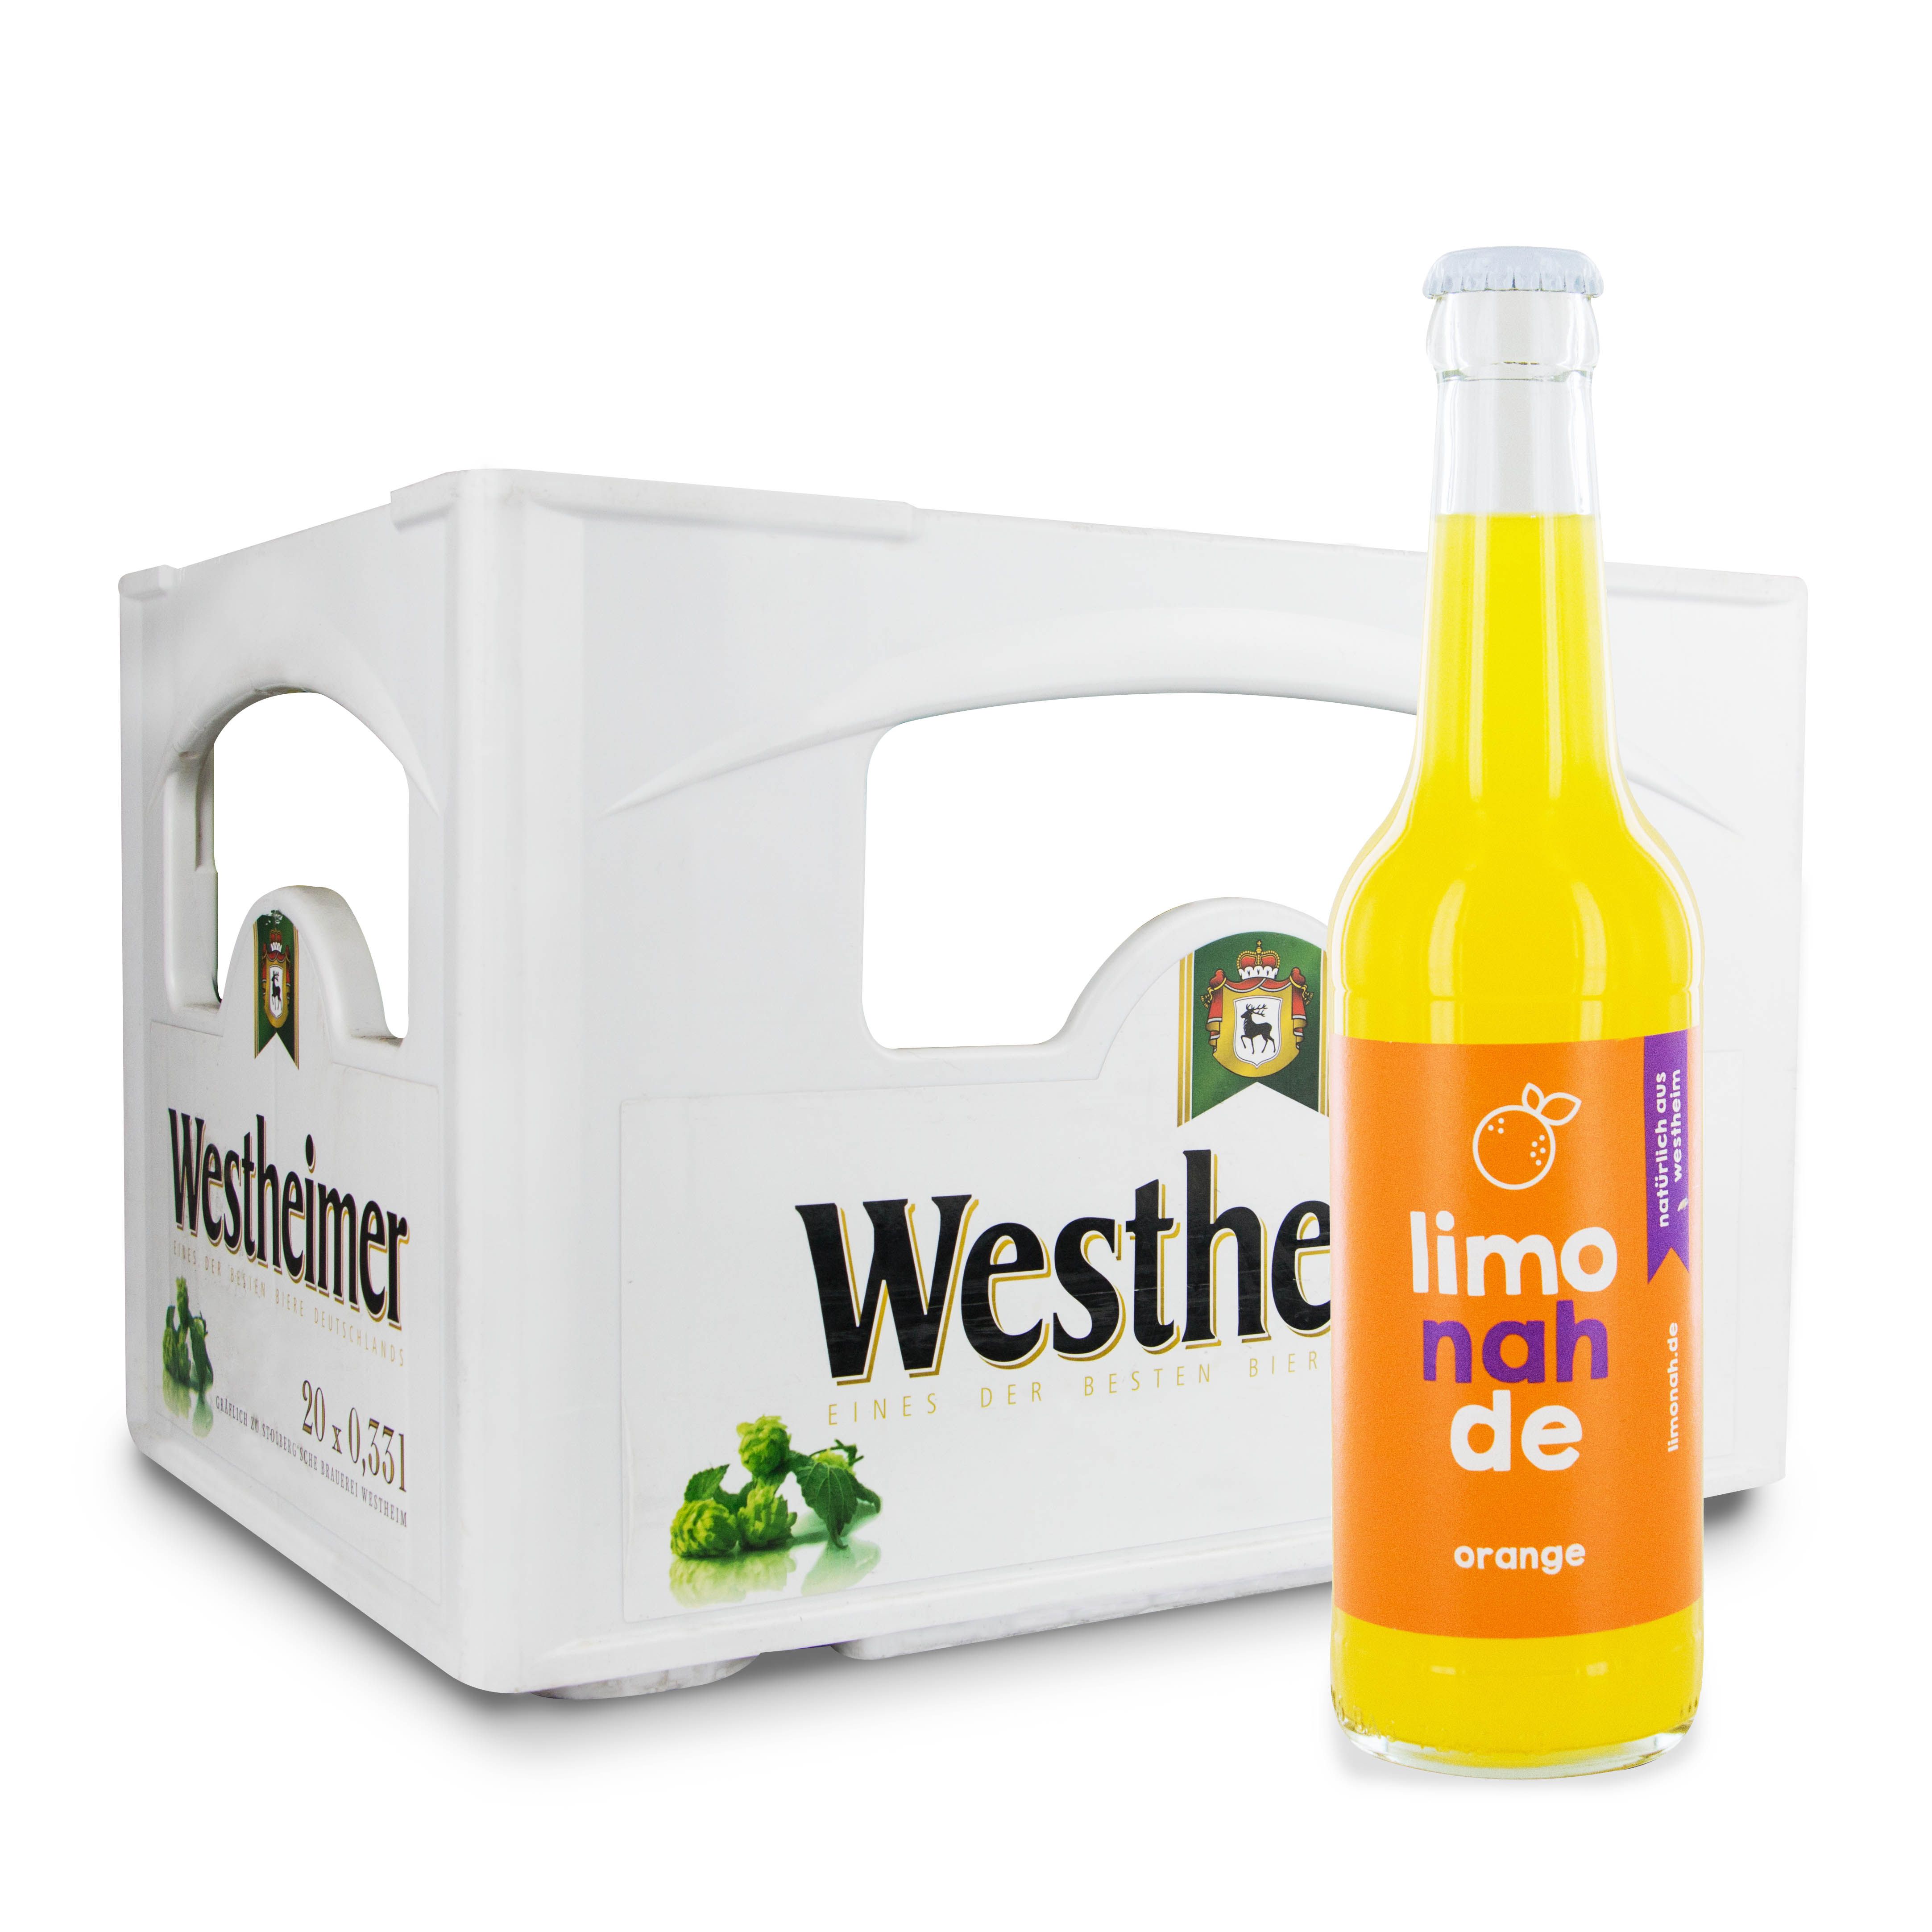 Westheimer limoNAHde Orange in der Kiste